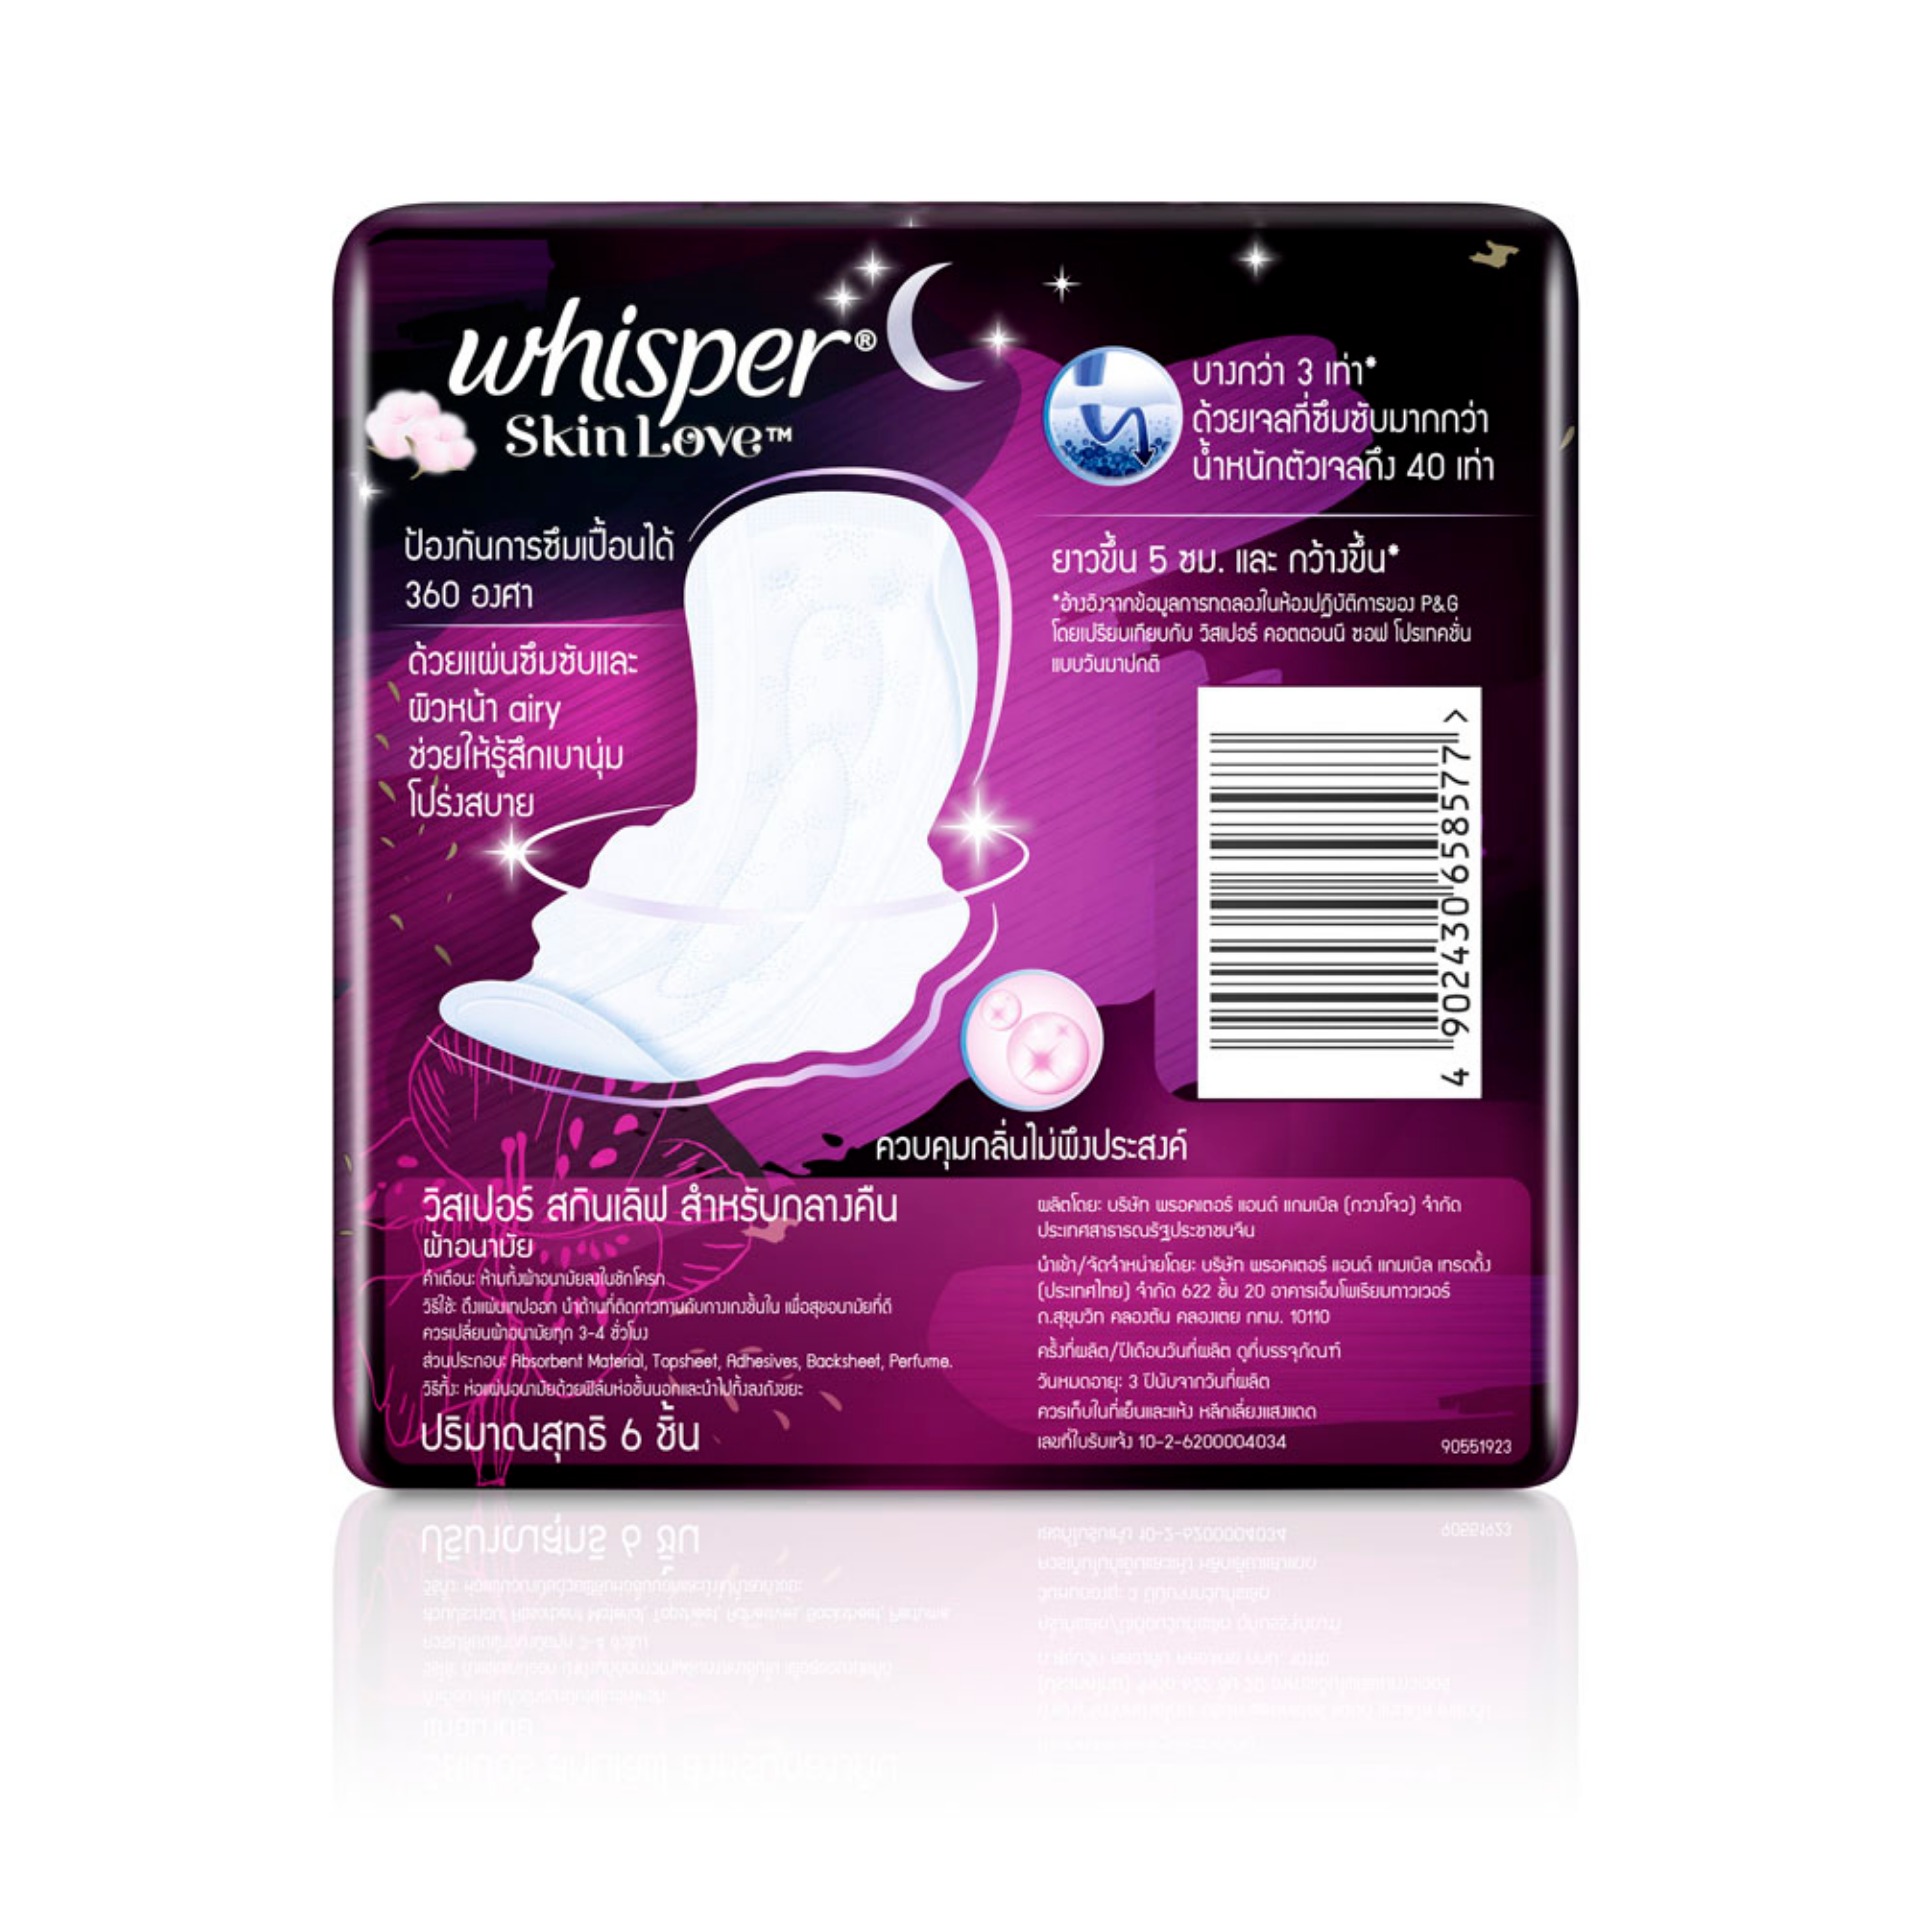 Whisper Skin Love Ultra Slim (Night)  Sanitary napkins with wings size 31 cm.x6 Twin Pack  วิสเปอร์ สกิน เลิฟ อัลตร้าสลิม แบบมีปีก สำหรับกลางคืน 31 ซม 6 แผ่น แพ็คคู่